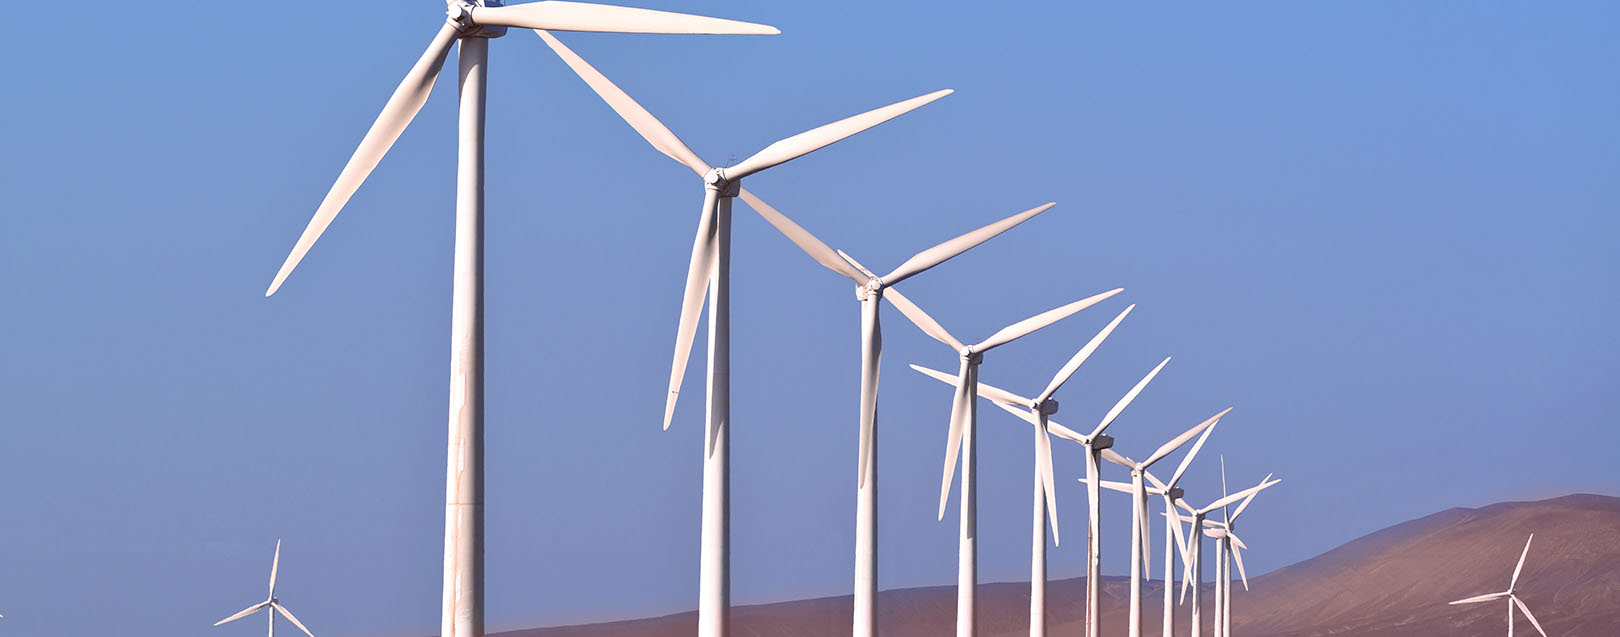 Inox Wind bags 100 MW renewable energy projects